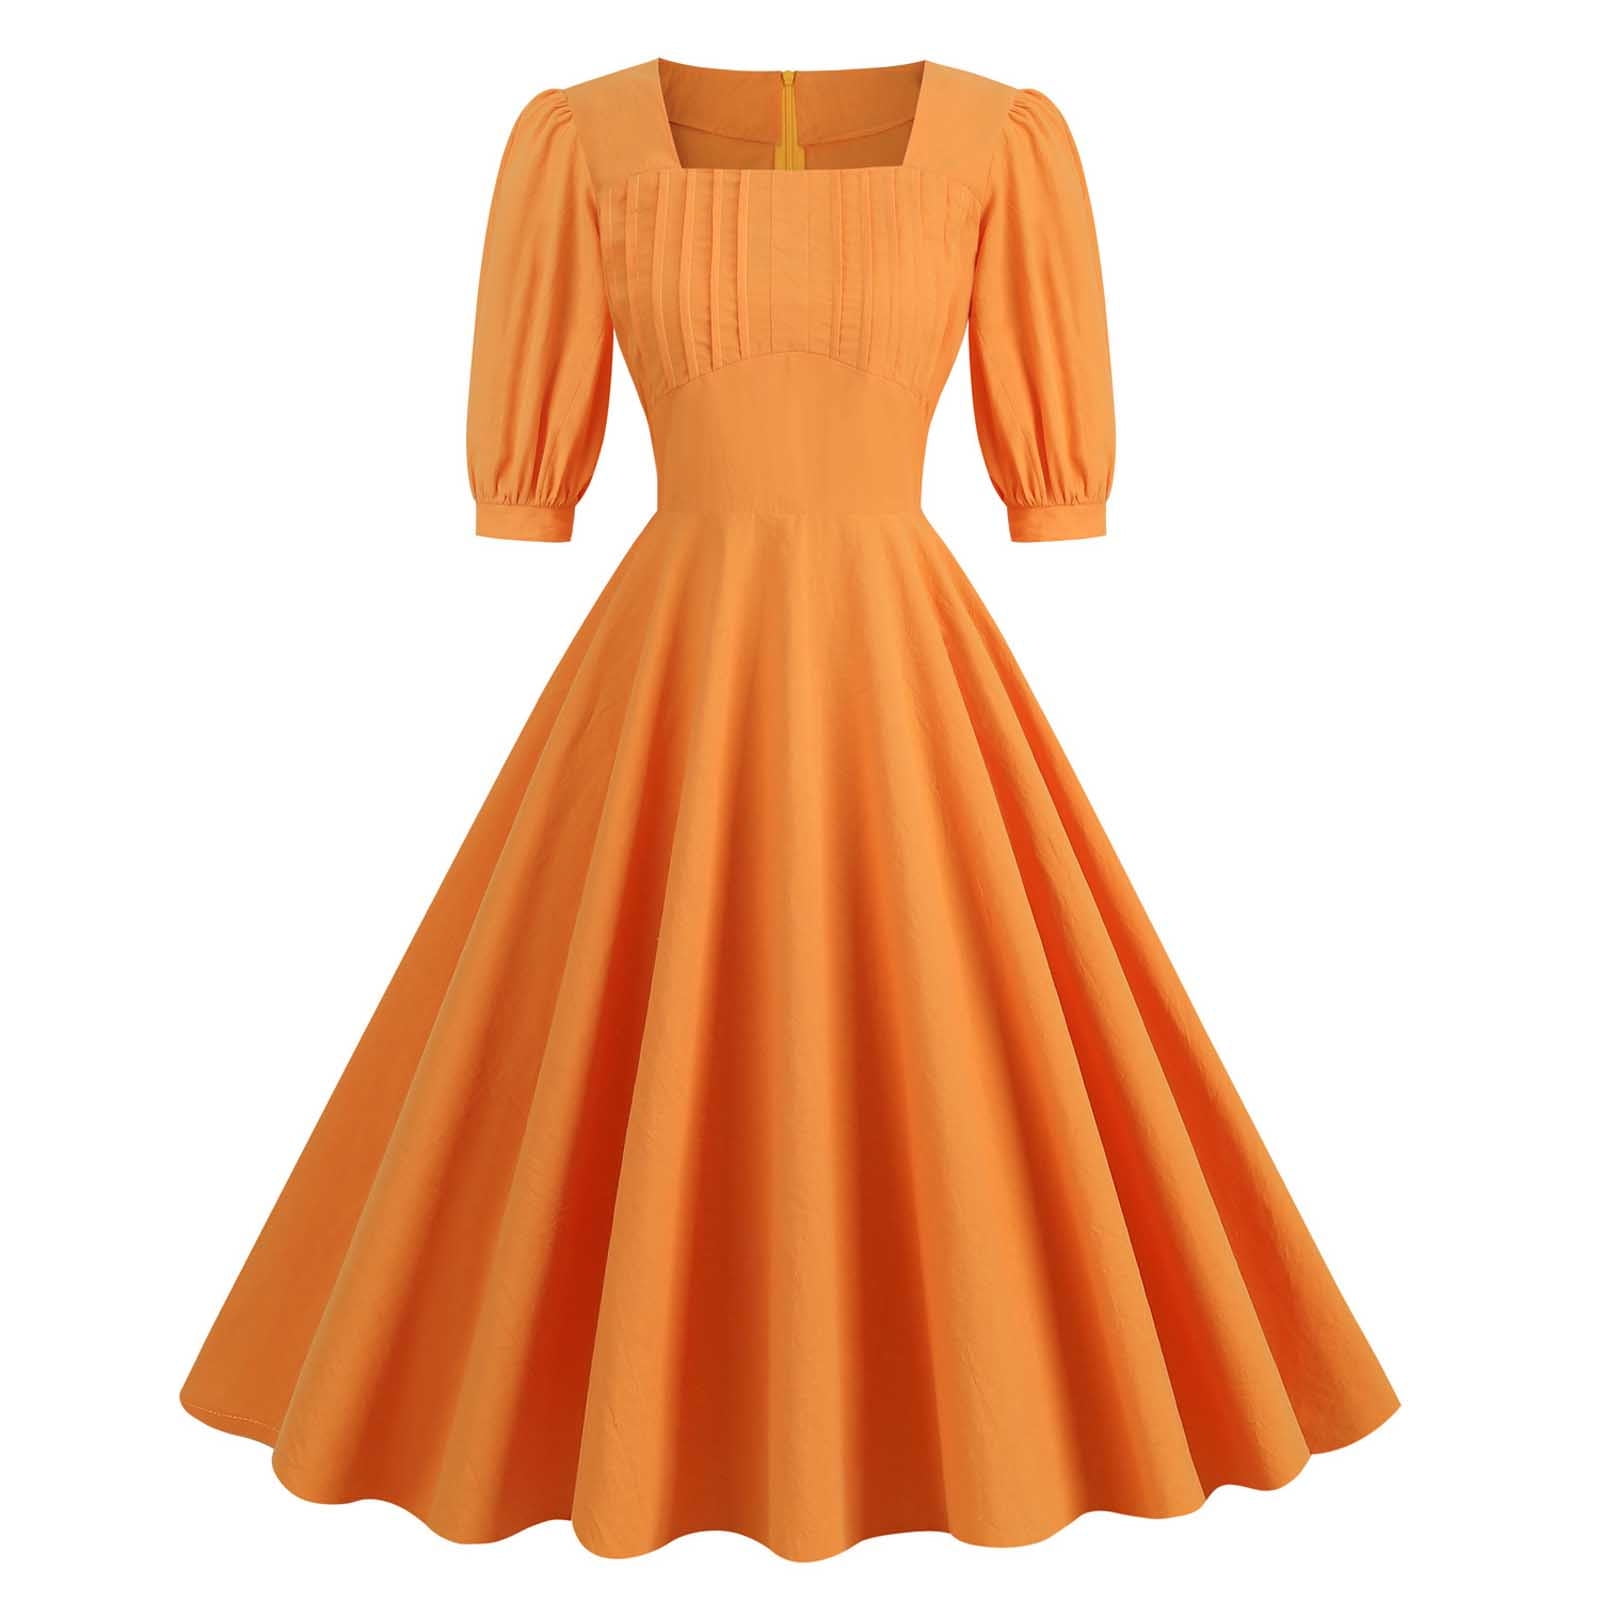 Gaecuw 1940s Dresses for Women Vintage Square Neck Short Sleeve Retro ...